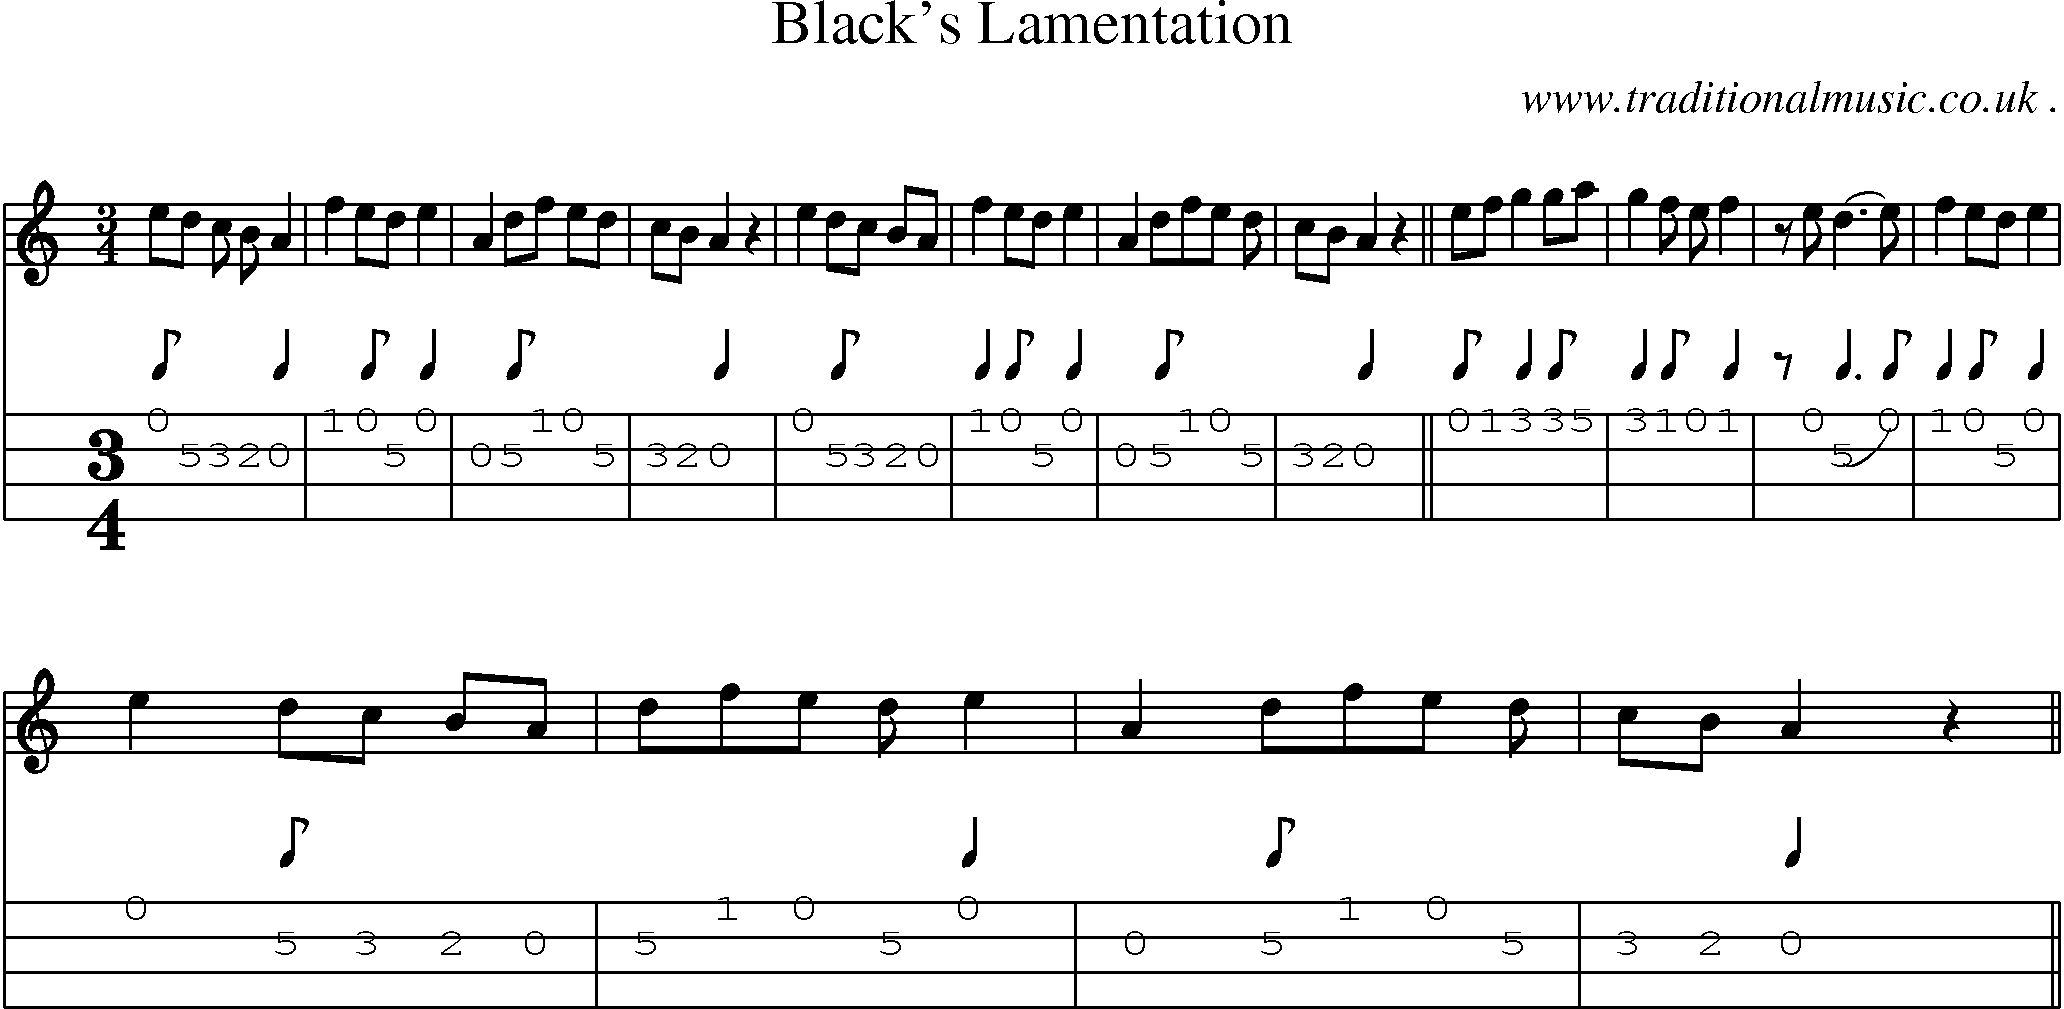 Sheet-Music and Mandolin Tabs for Blacks Lamentation